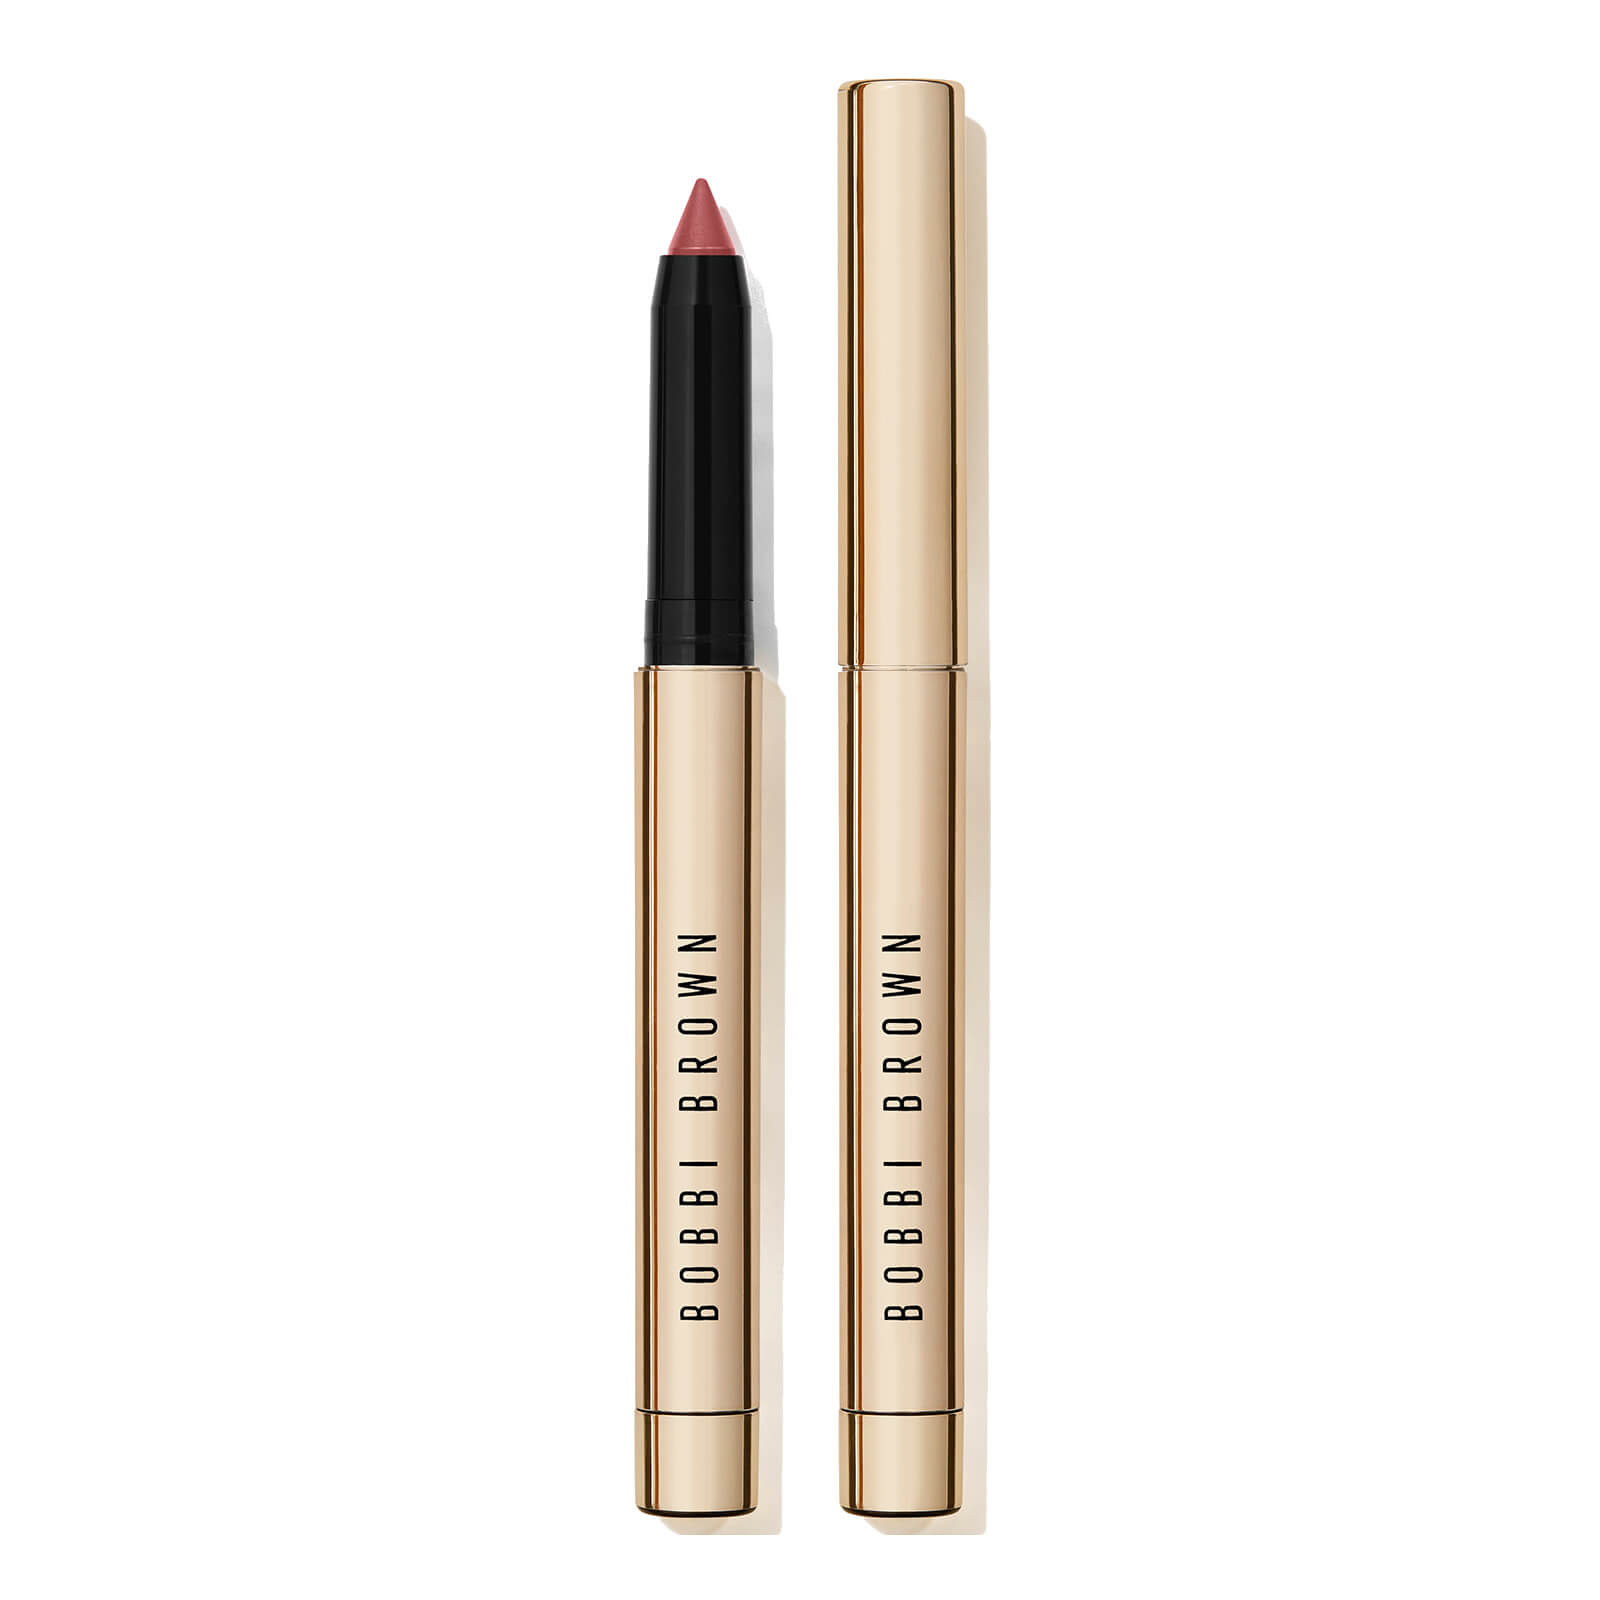 Bobbi Brown Luxe Defining Lipstick 6g - Various Shades - Avant Gardenia